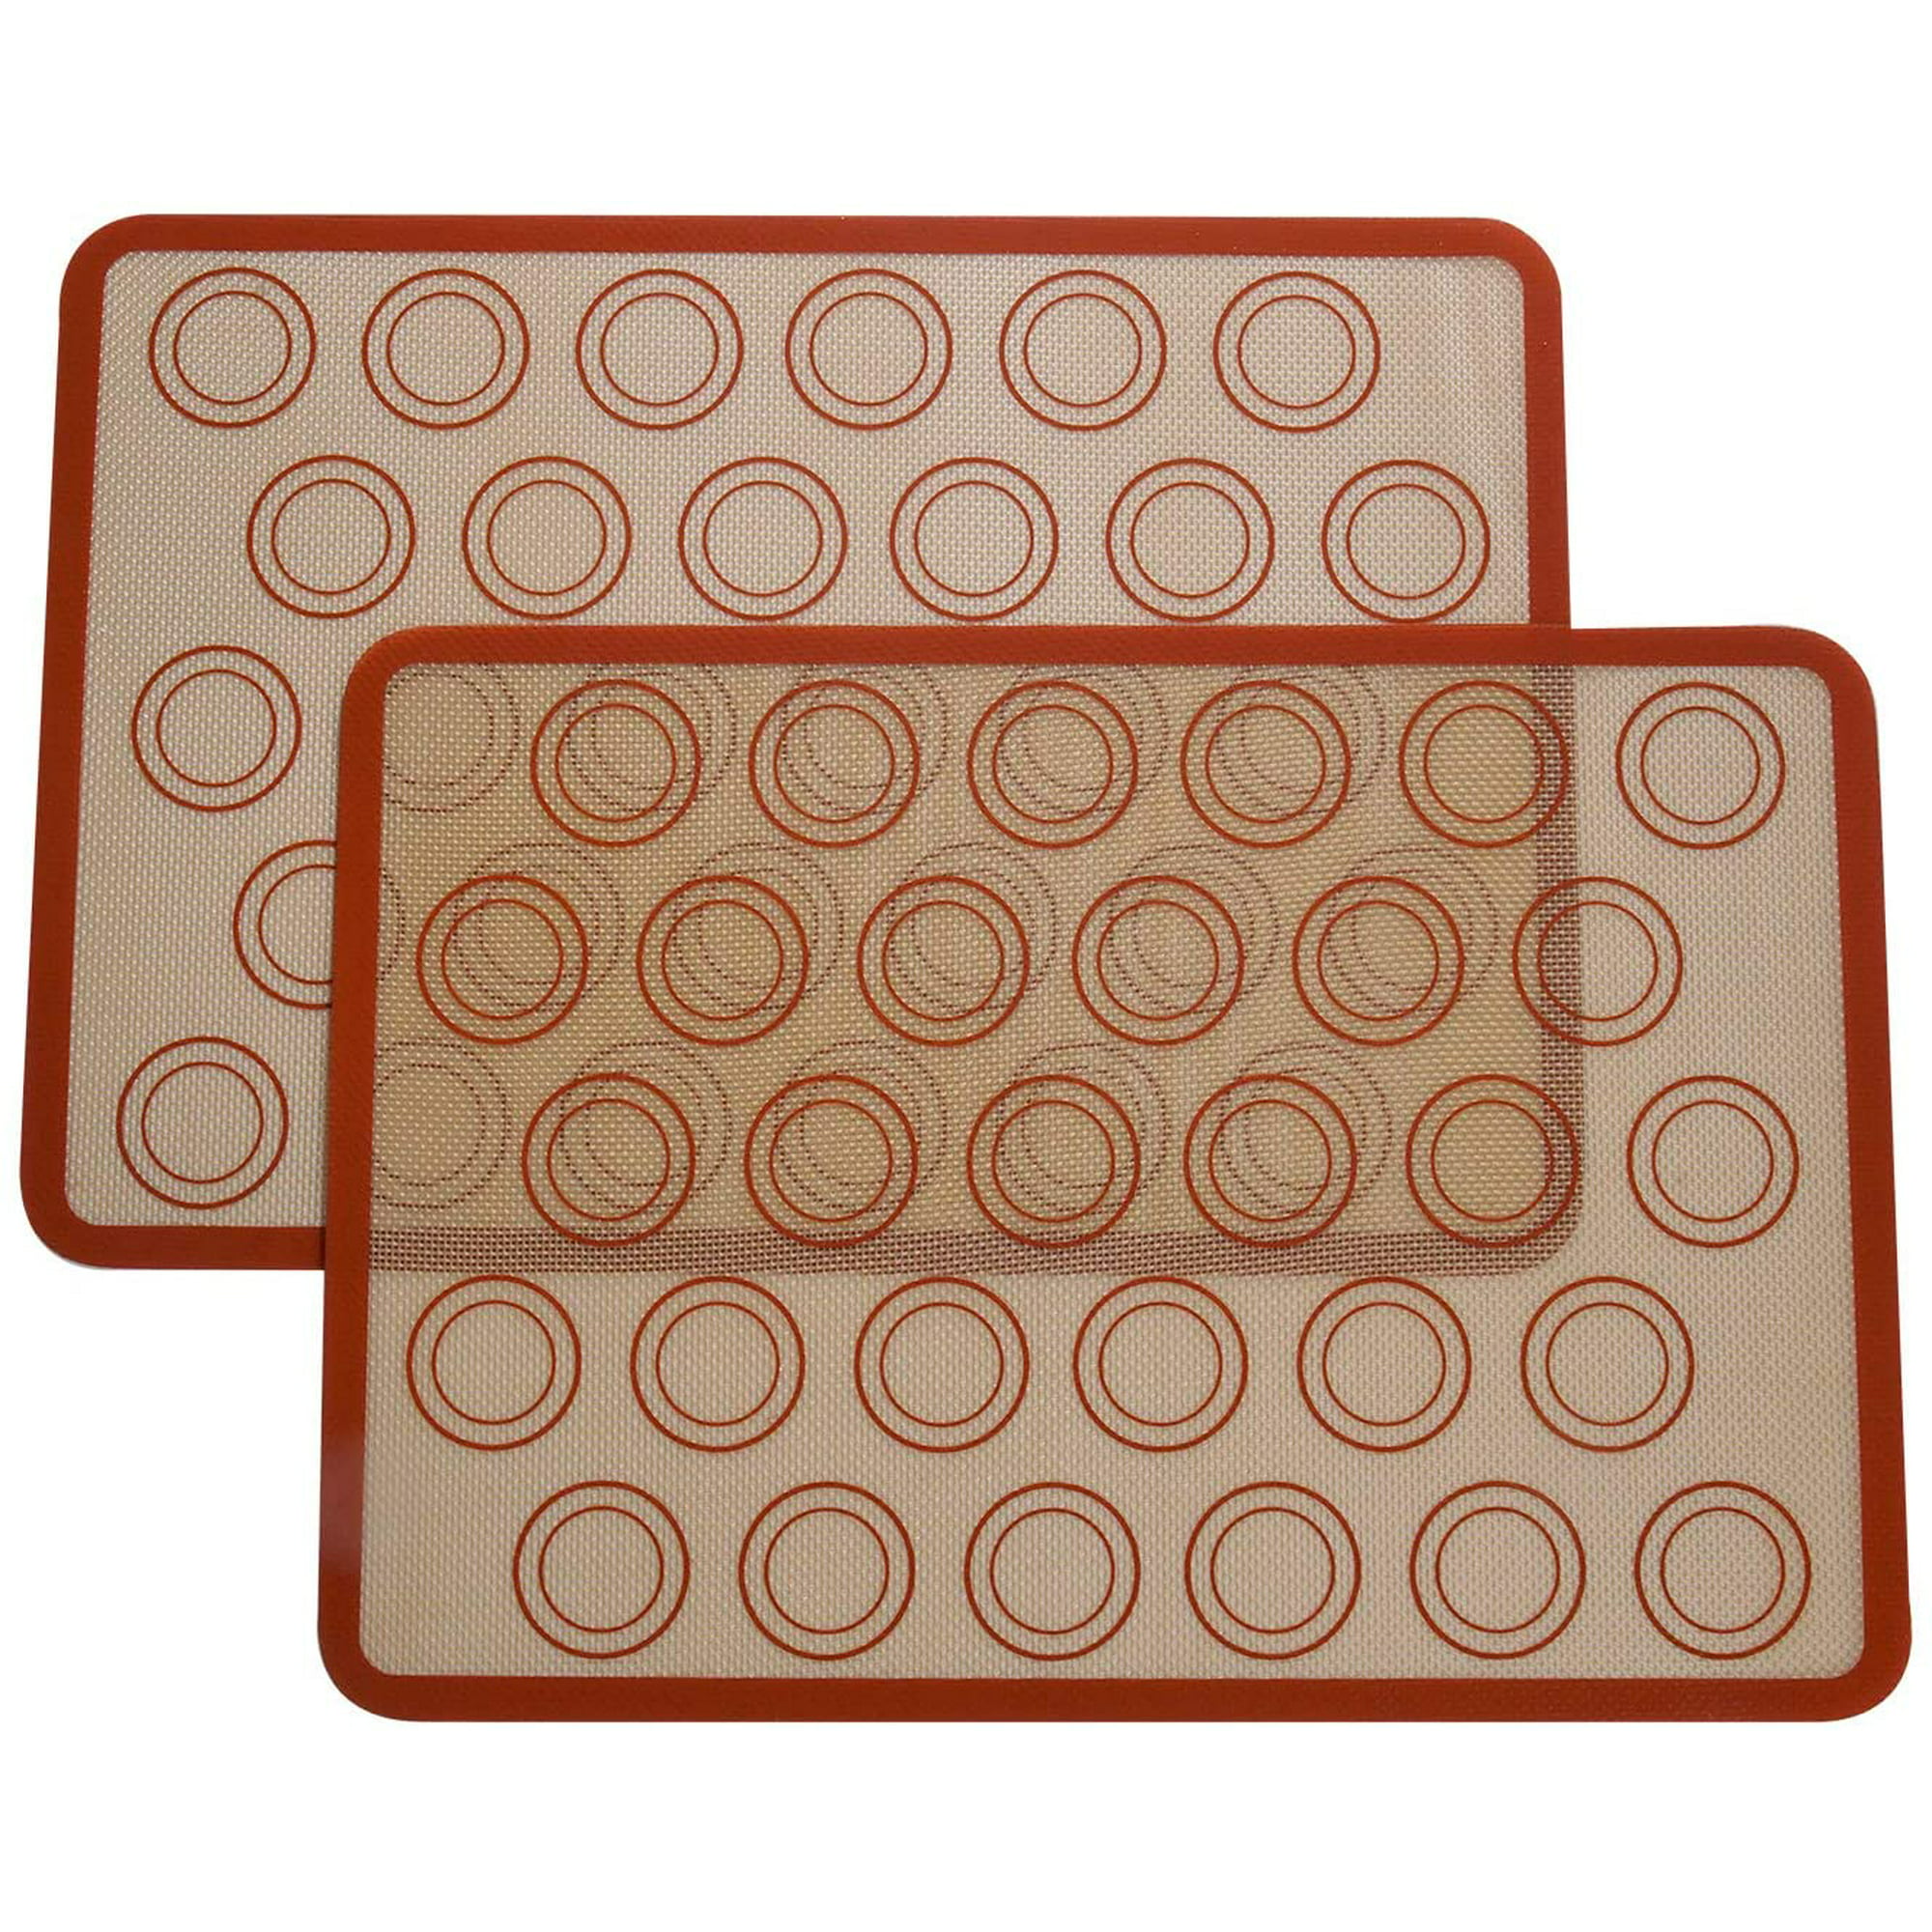 Tapete de silicona para macarons 42 x 29.5 cm